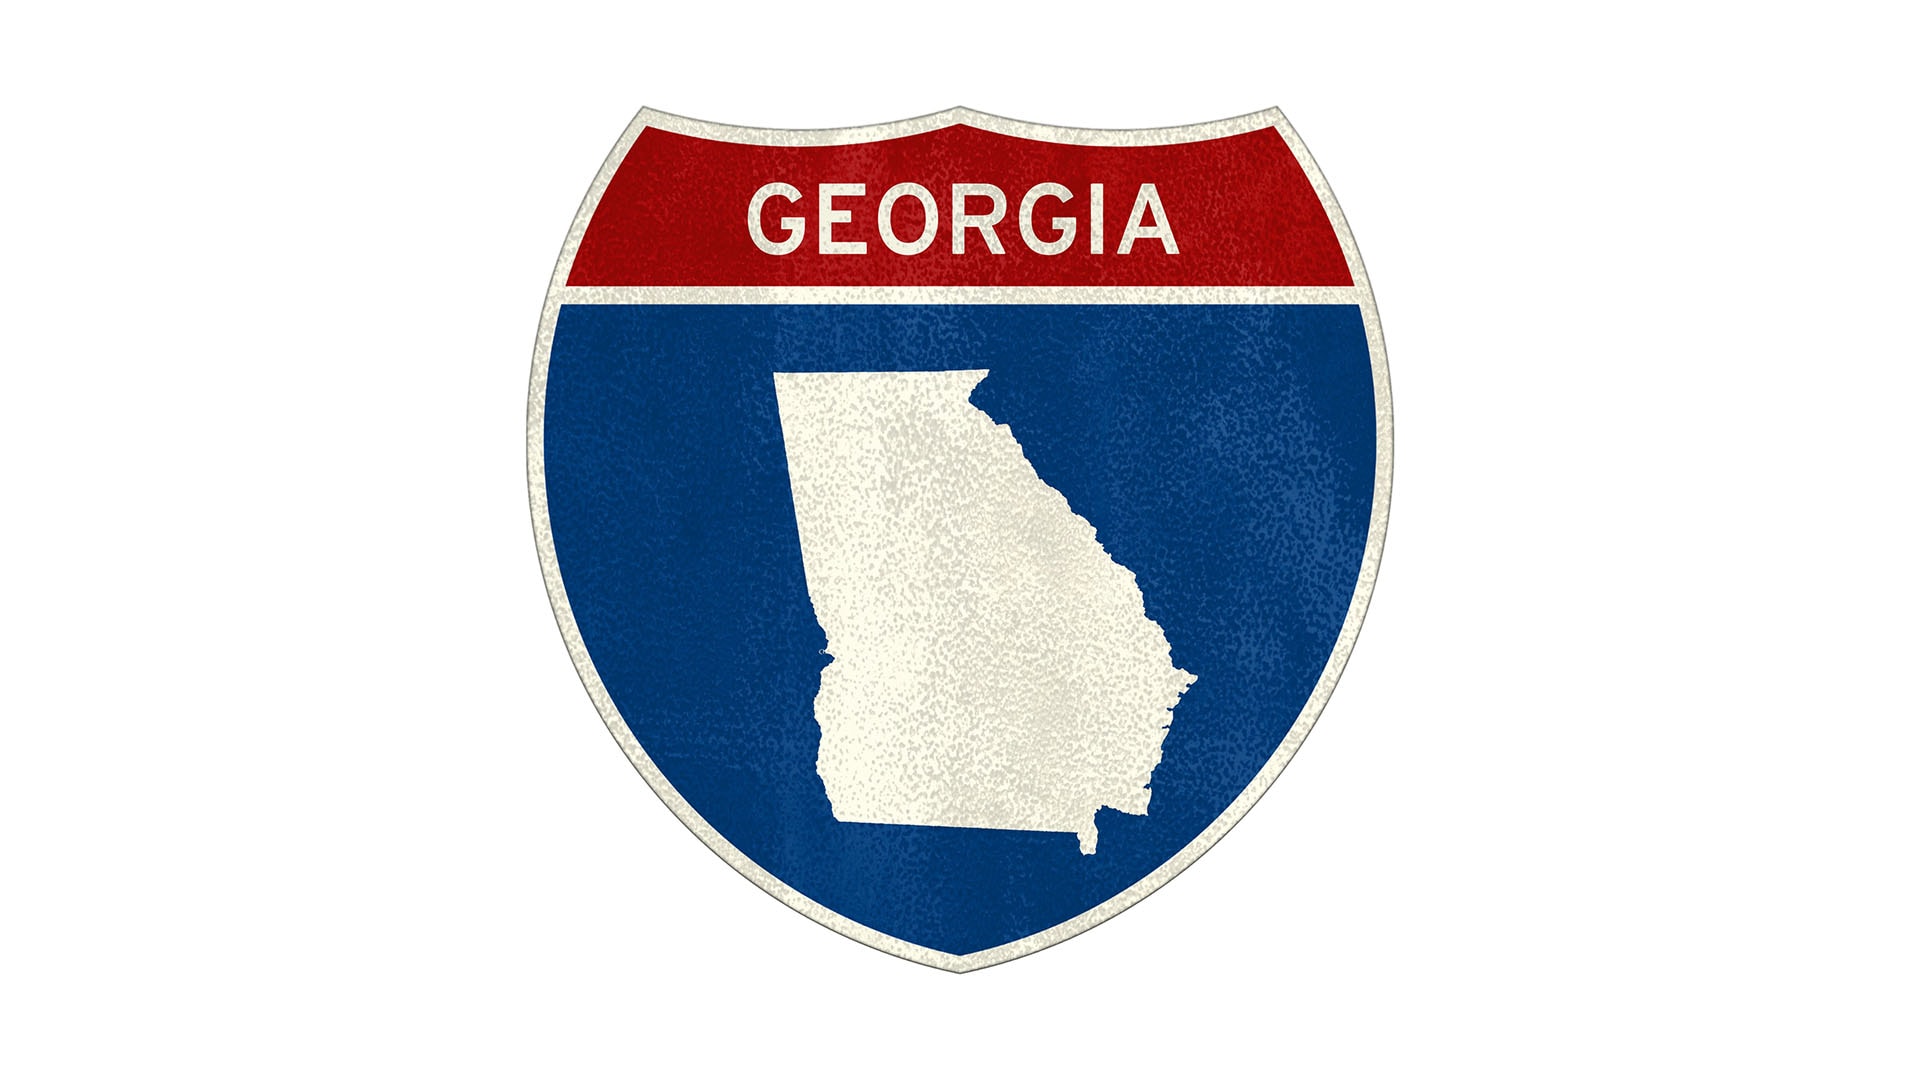 Georgia state roadside sign